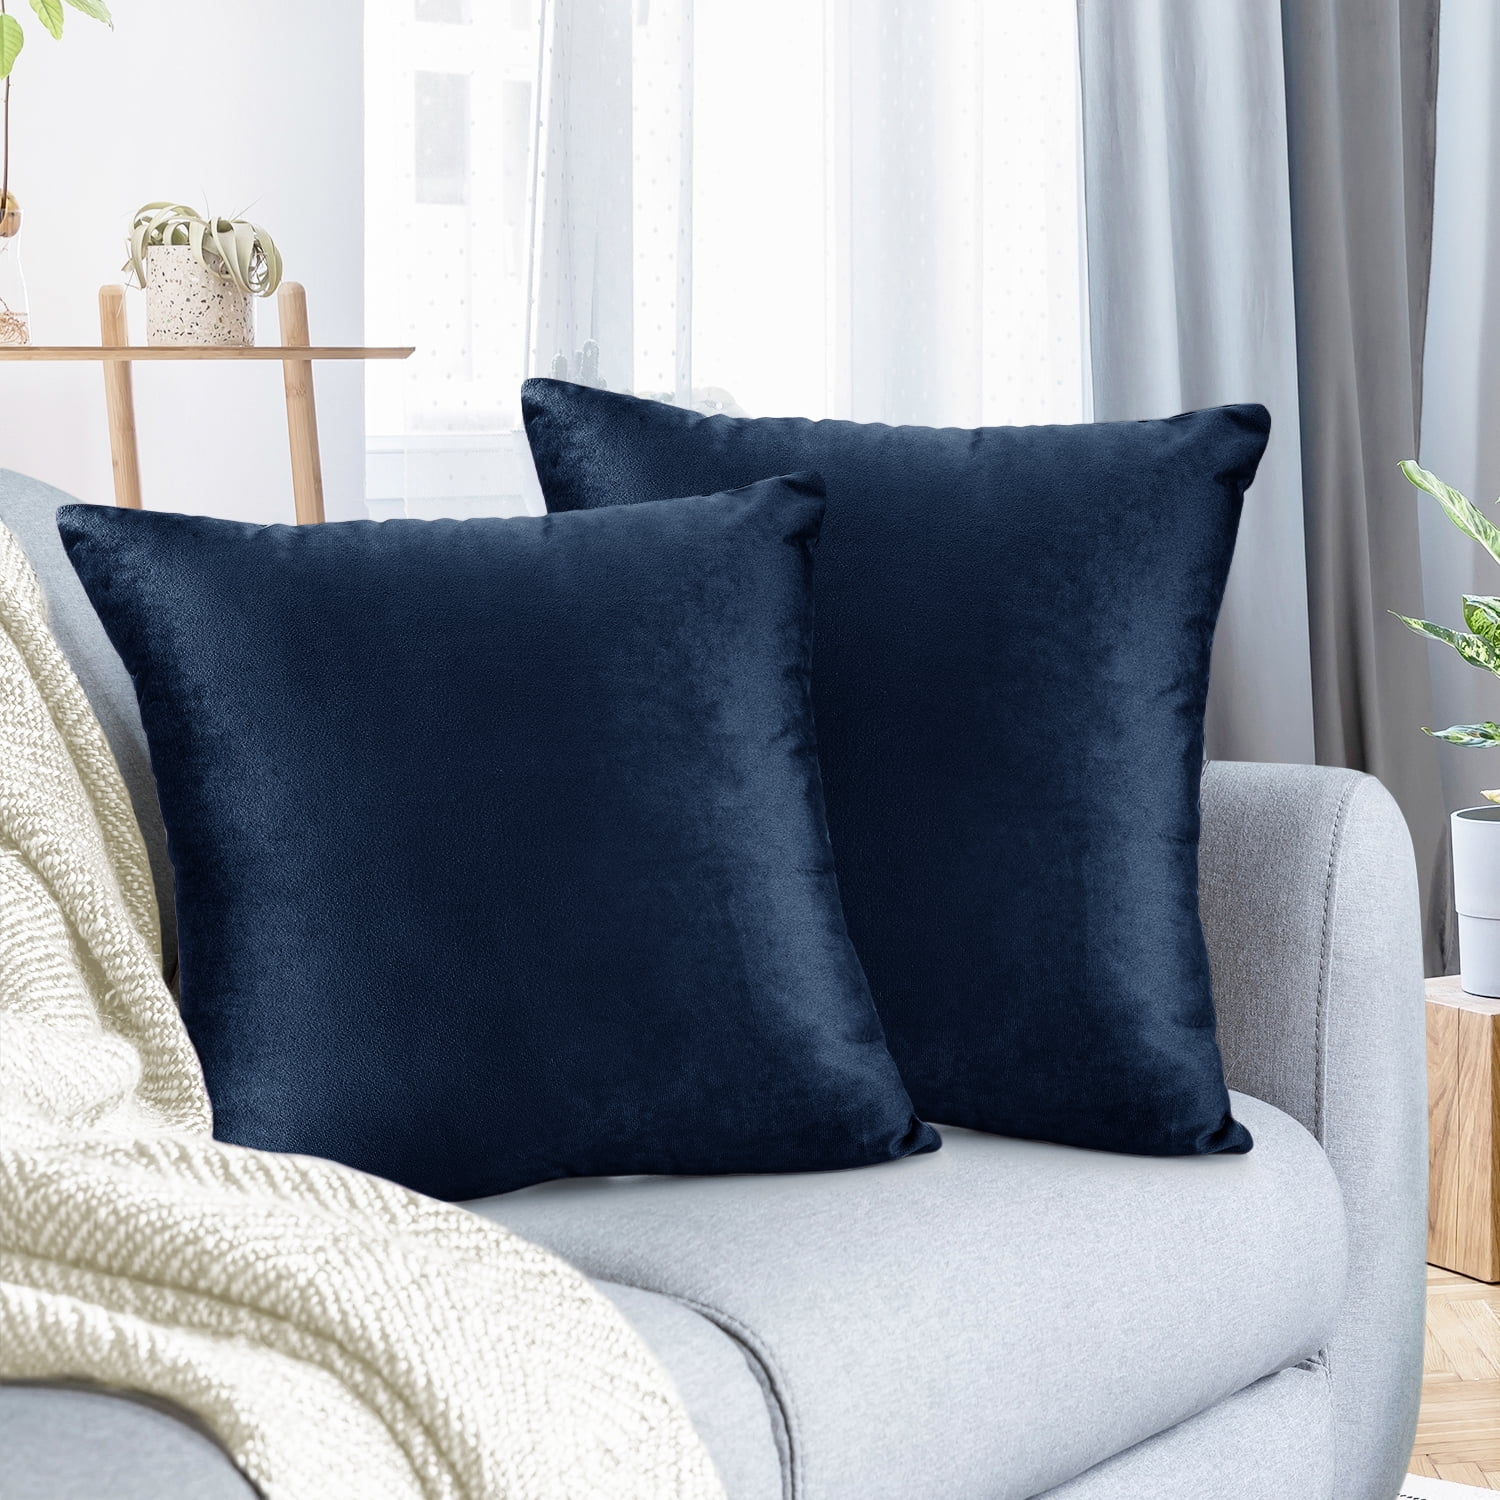 Surya Cotton Velvet 18-in x 18-in Bright Blue Indoor Decorative Pillow